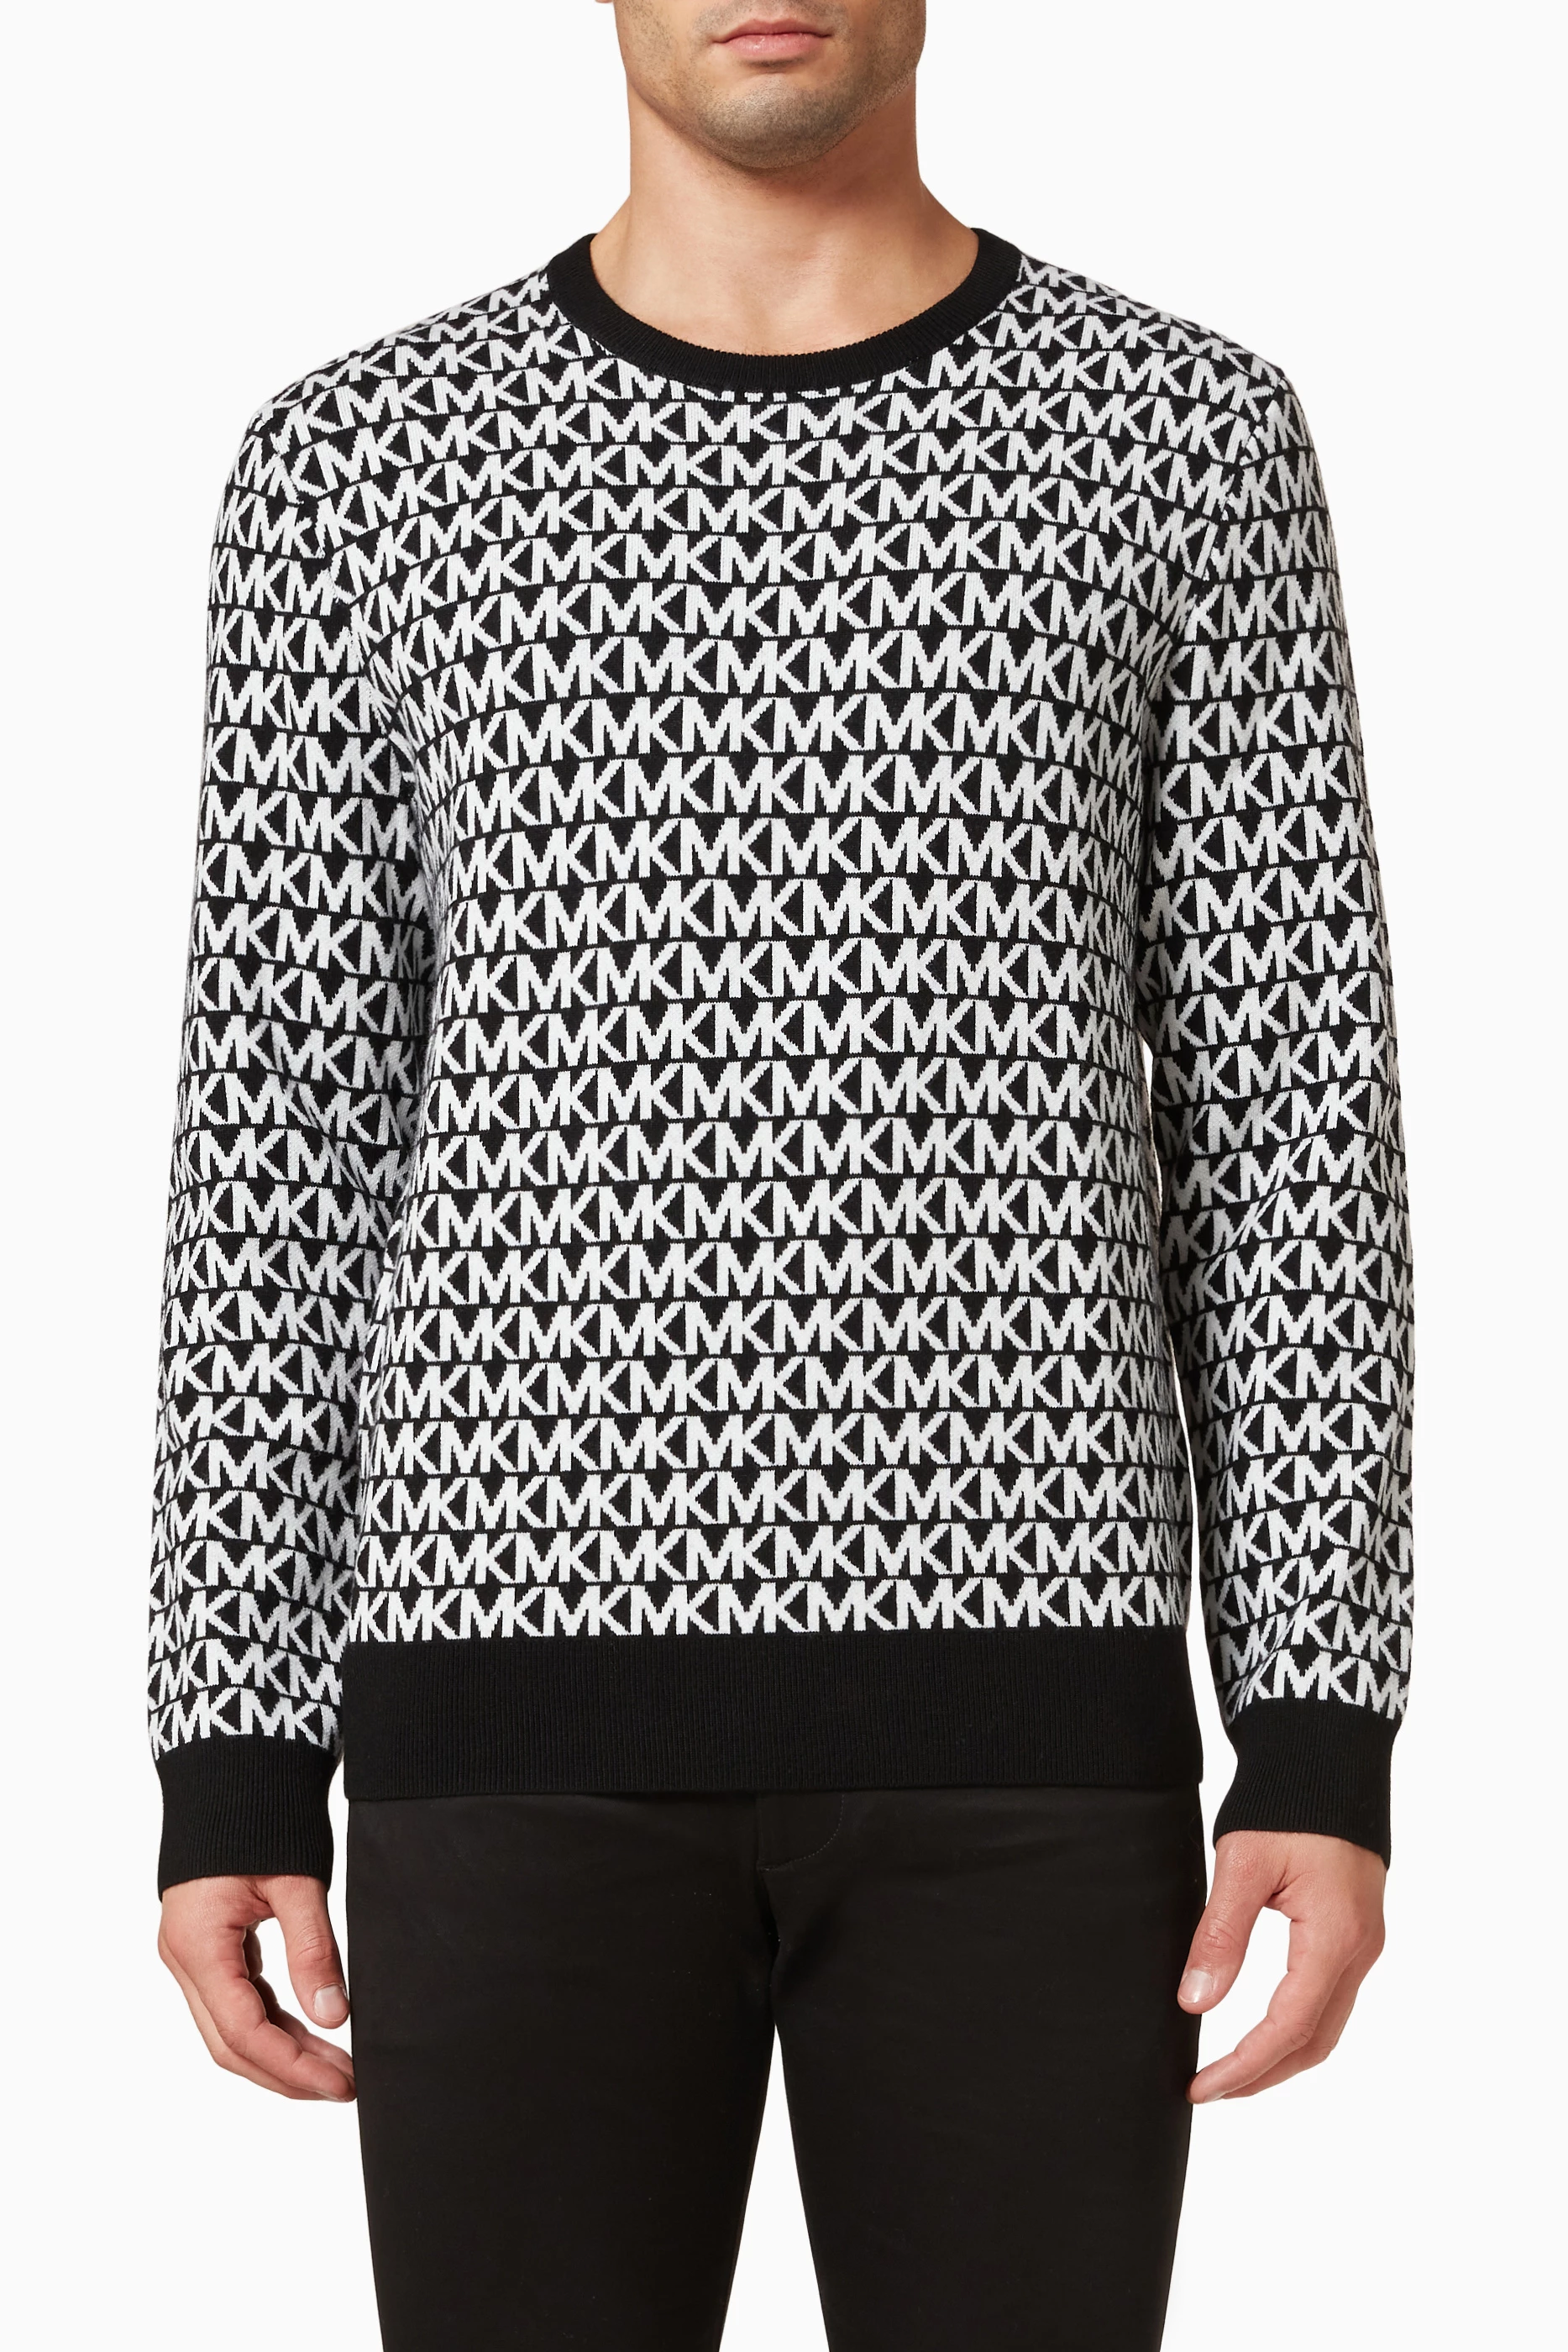 Shop Michael Kors Black Logo Jacquard Sweater in Merino Wool for MEN |  Ounass Saudi Arabia